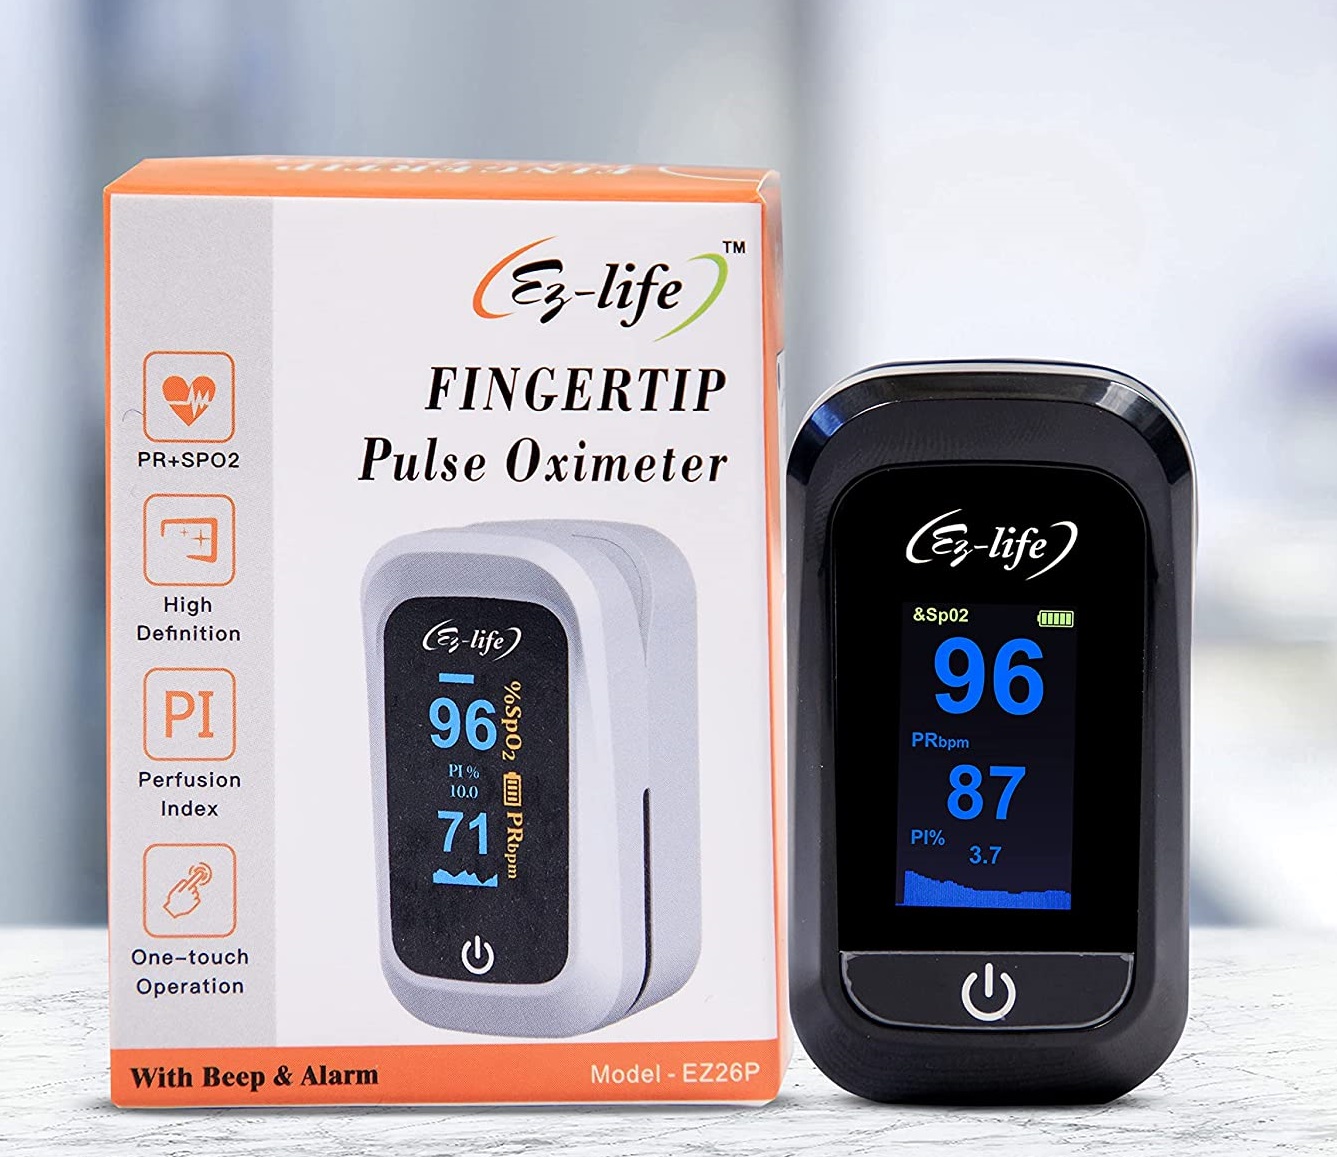 Ez-Life EZ 26P Fingertip Pulse Oximeter